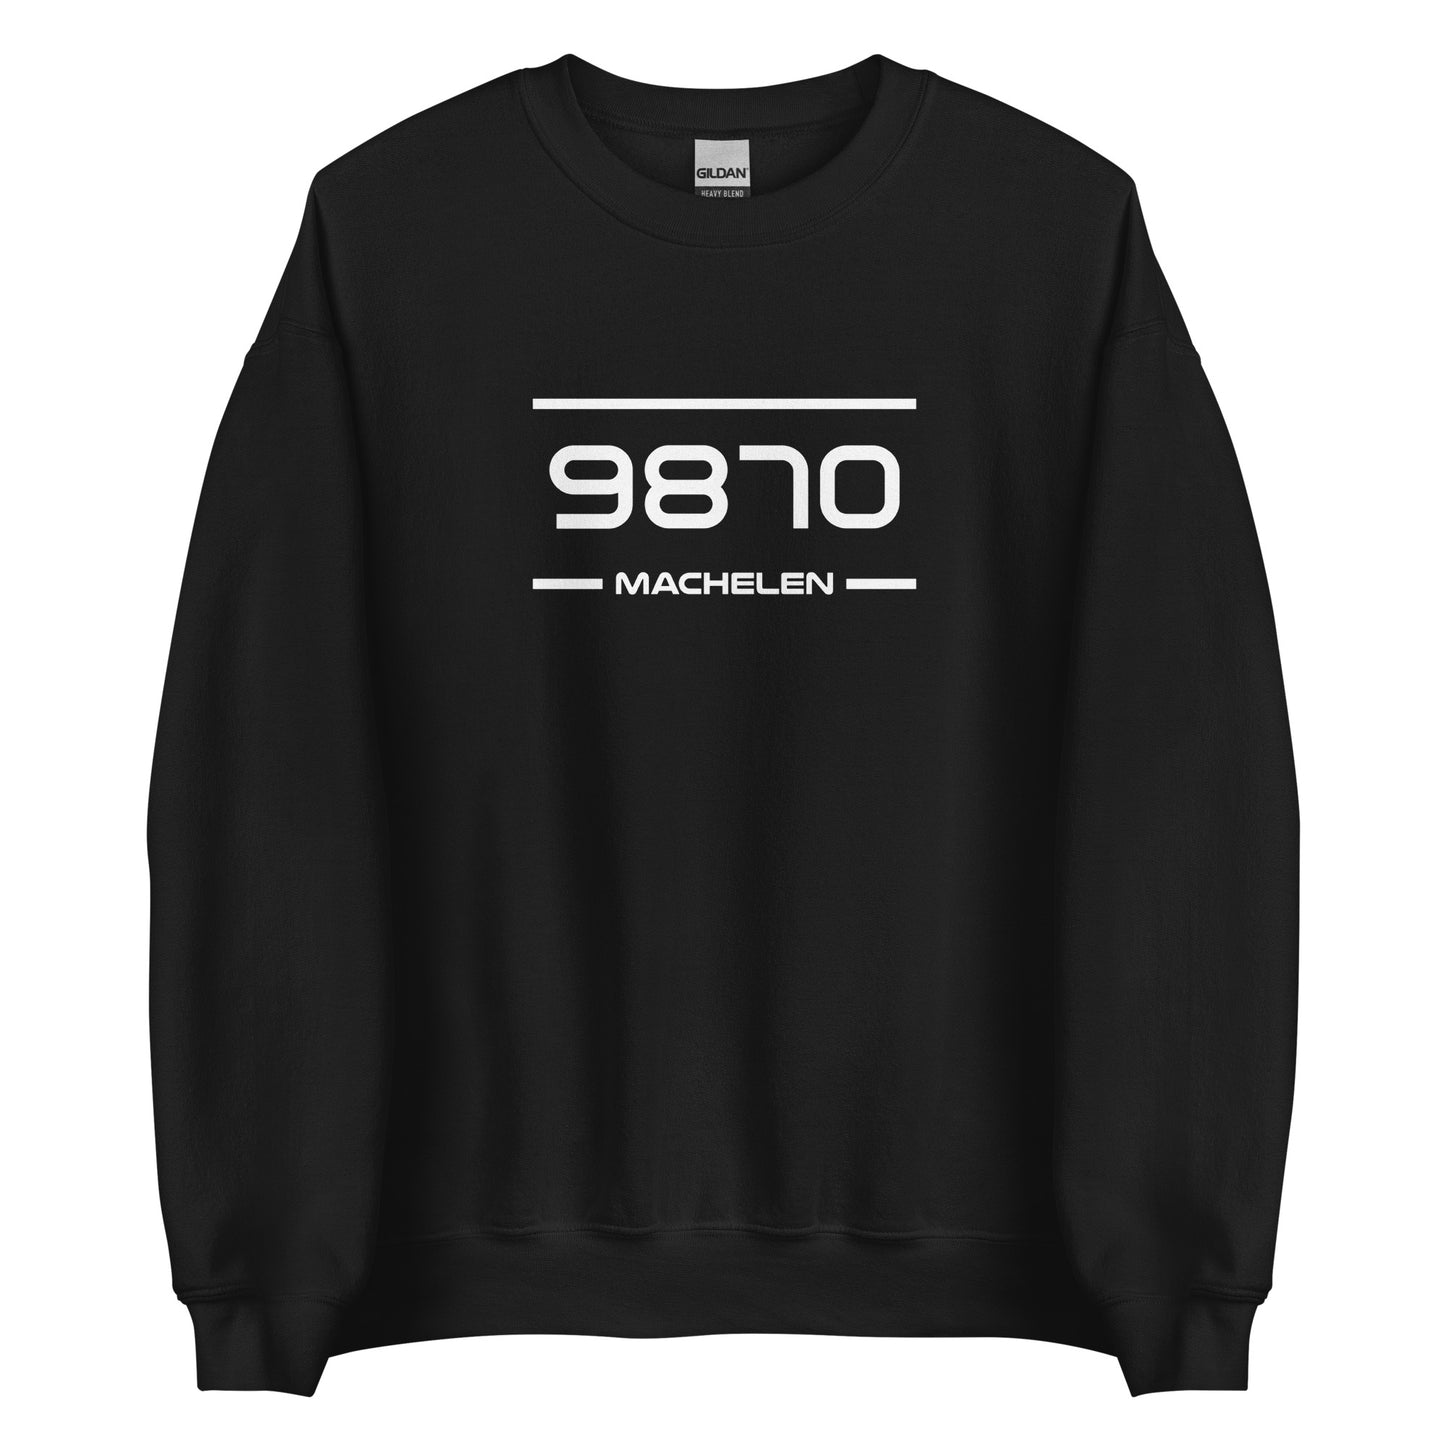 Sweater - 9870 - Machelen (M/V)